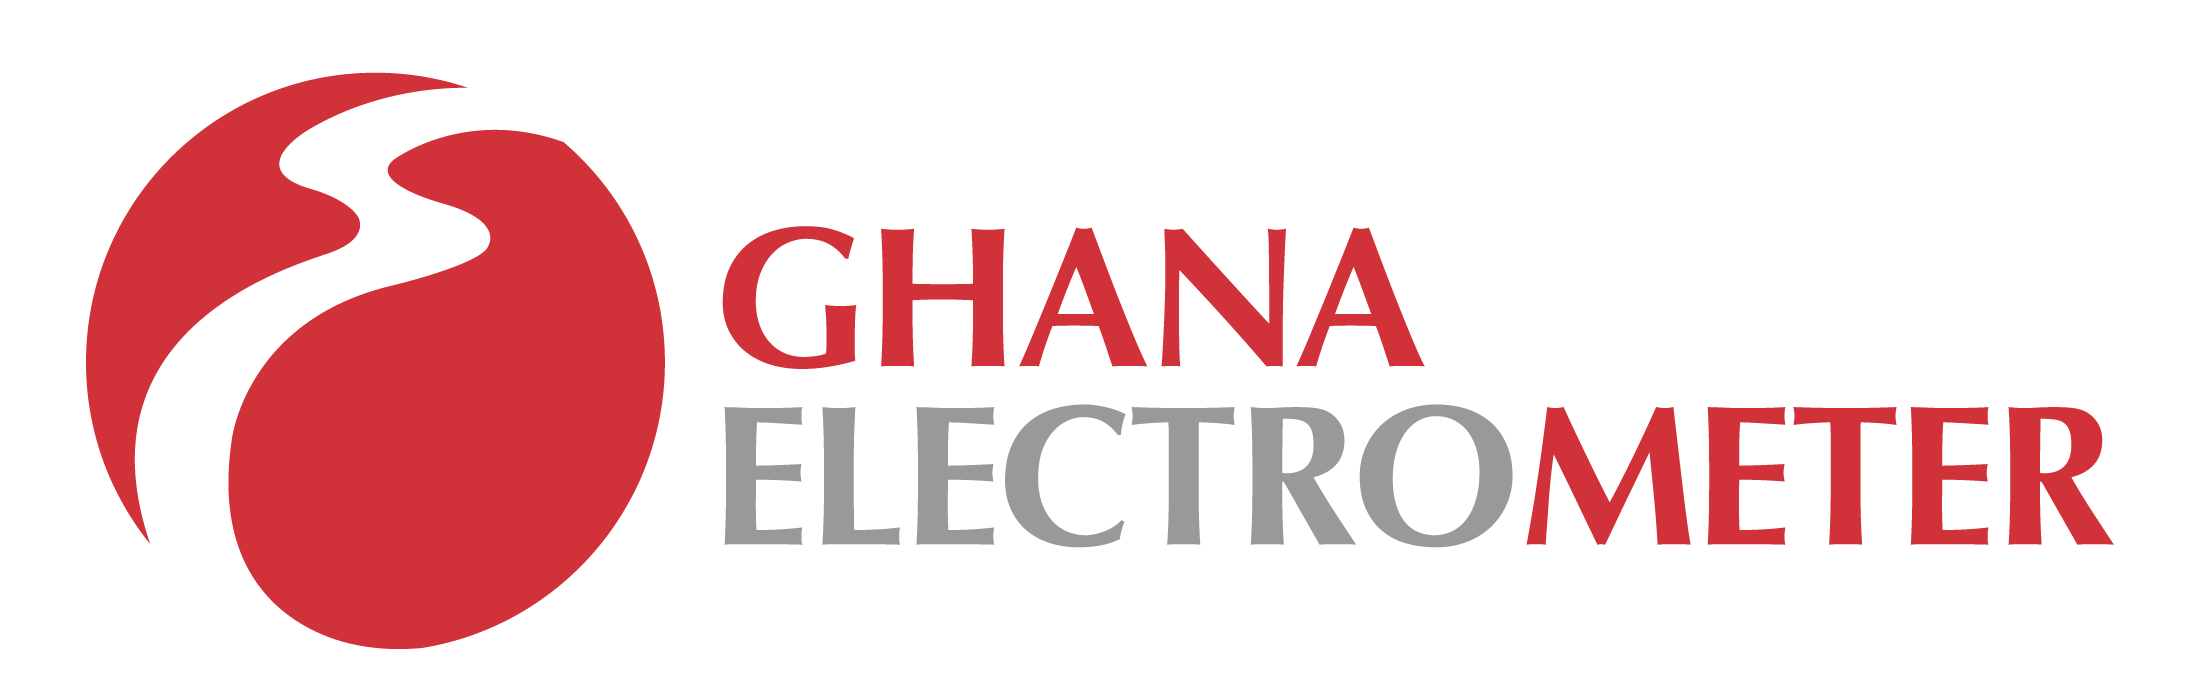 Ghana Electrometer